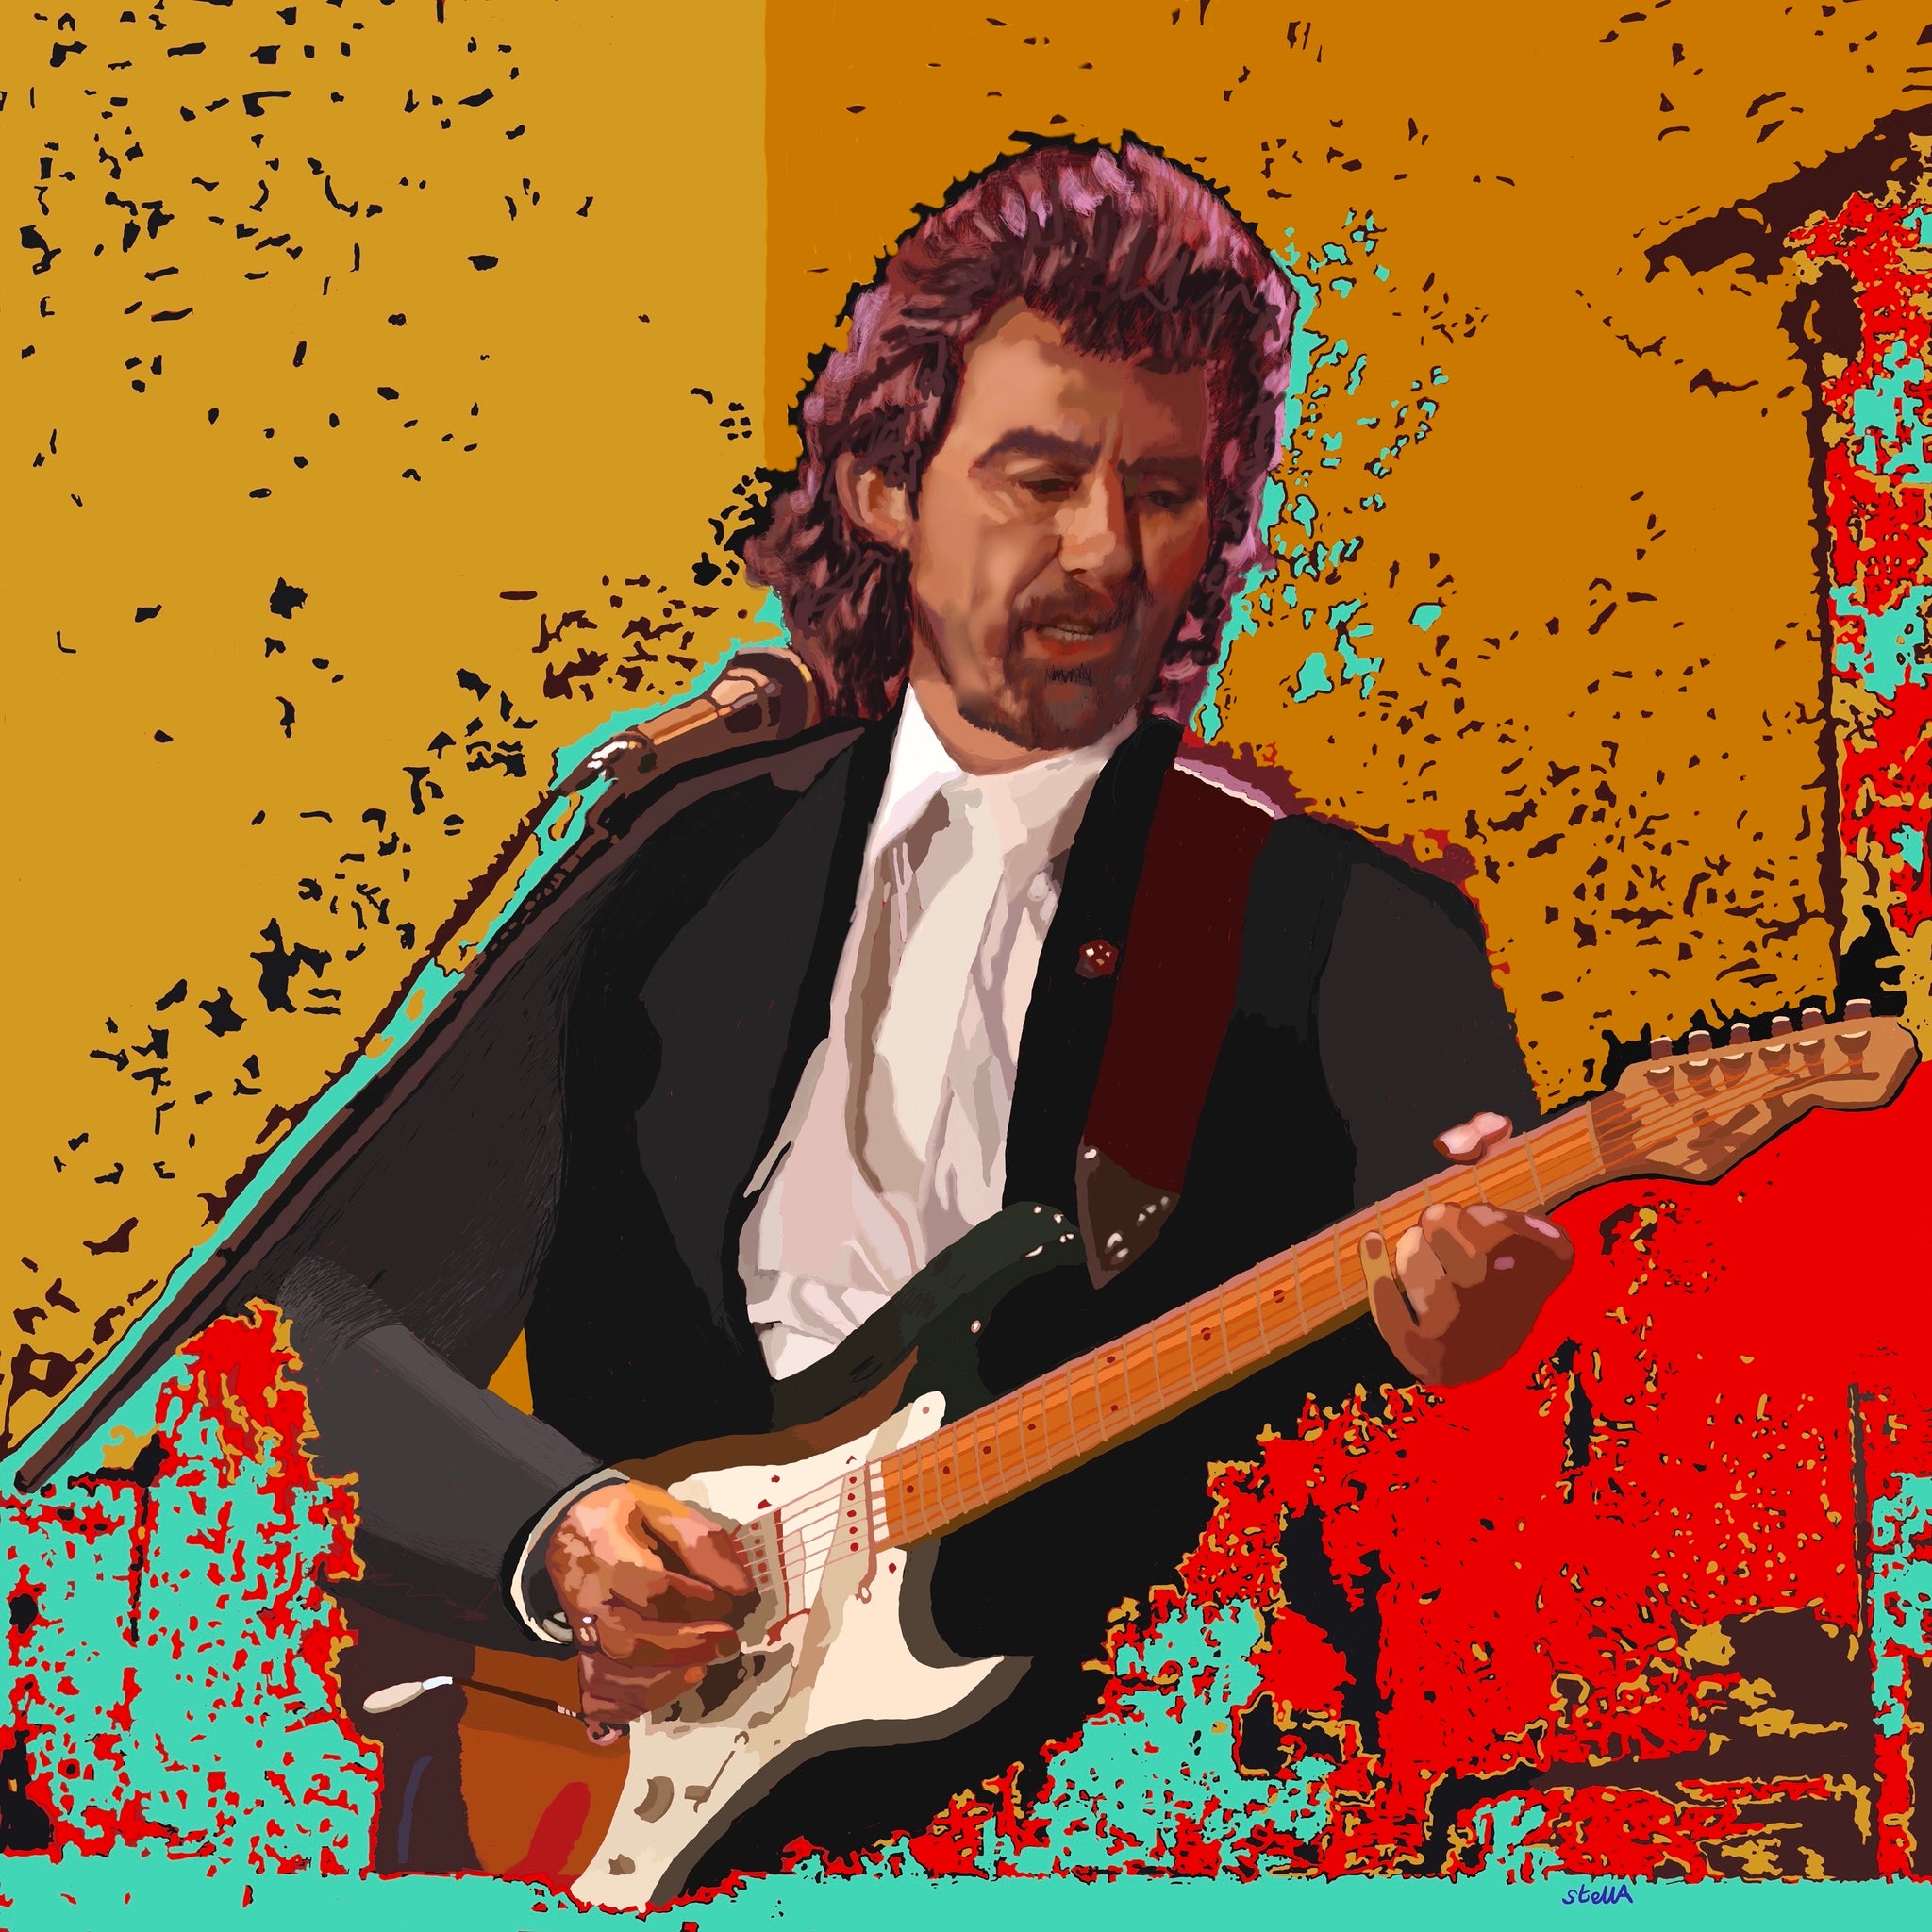 George Harrison digital painting by Stella Tooth portrait artist